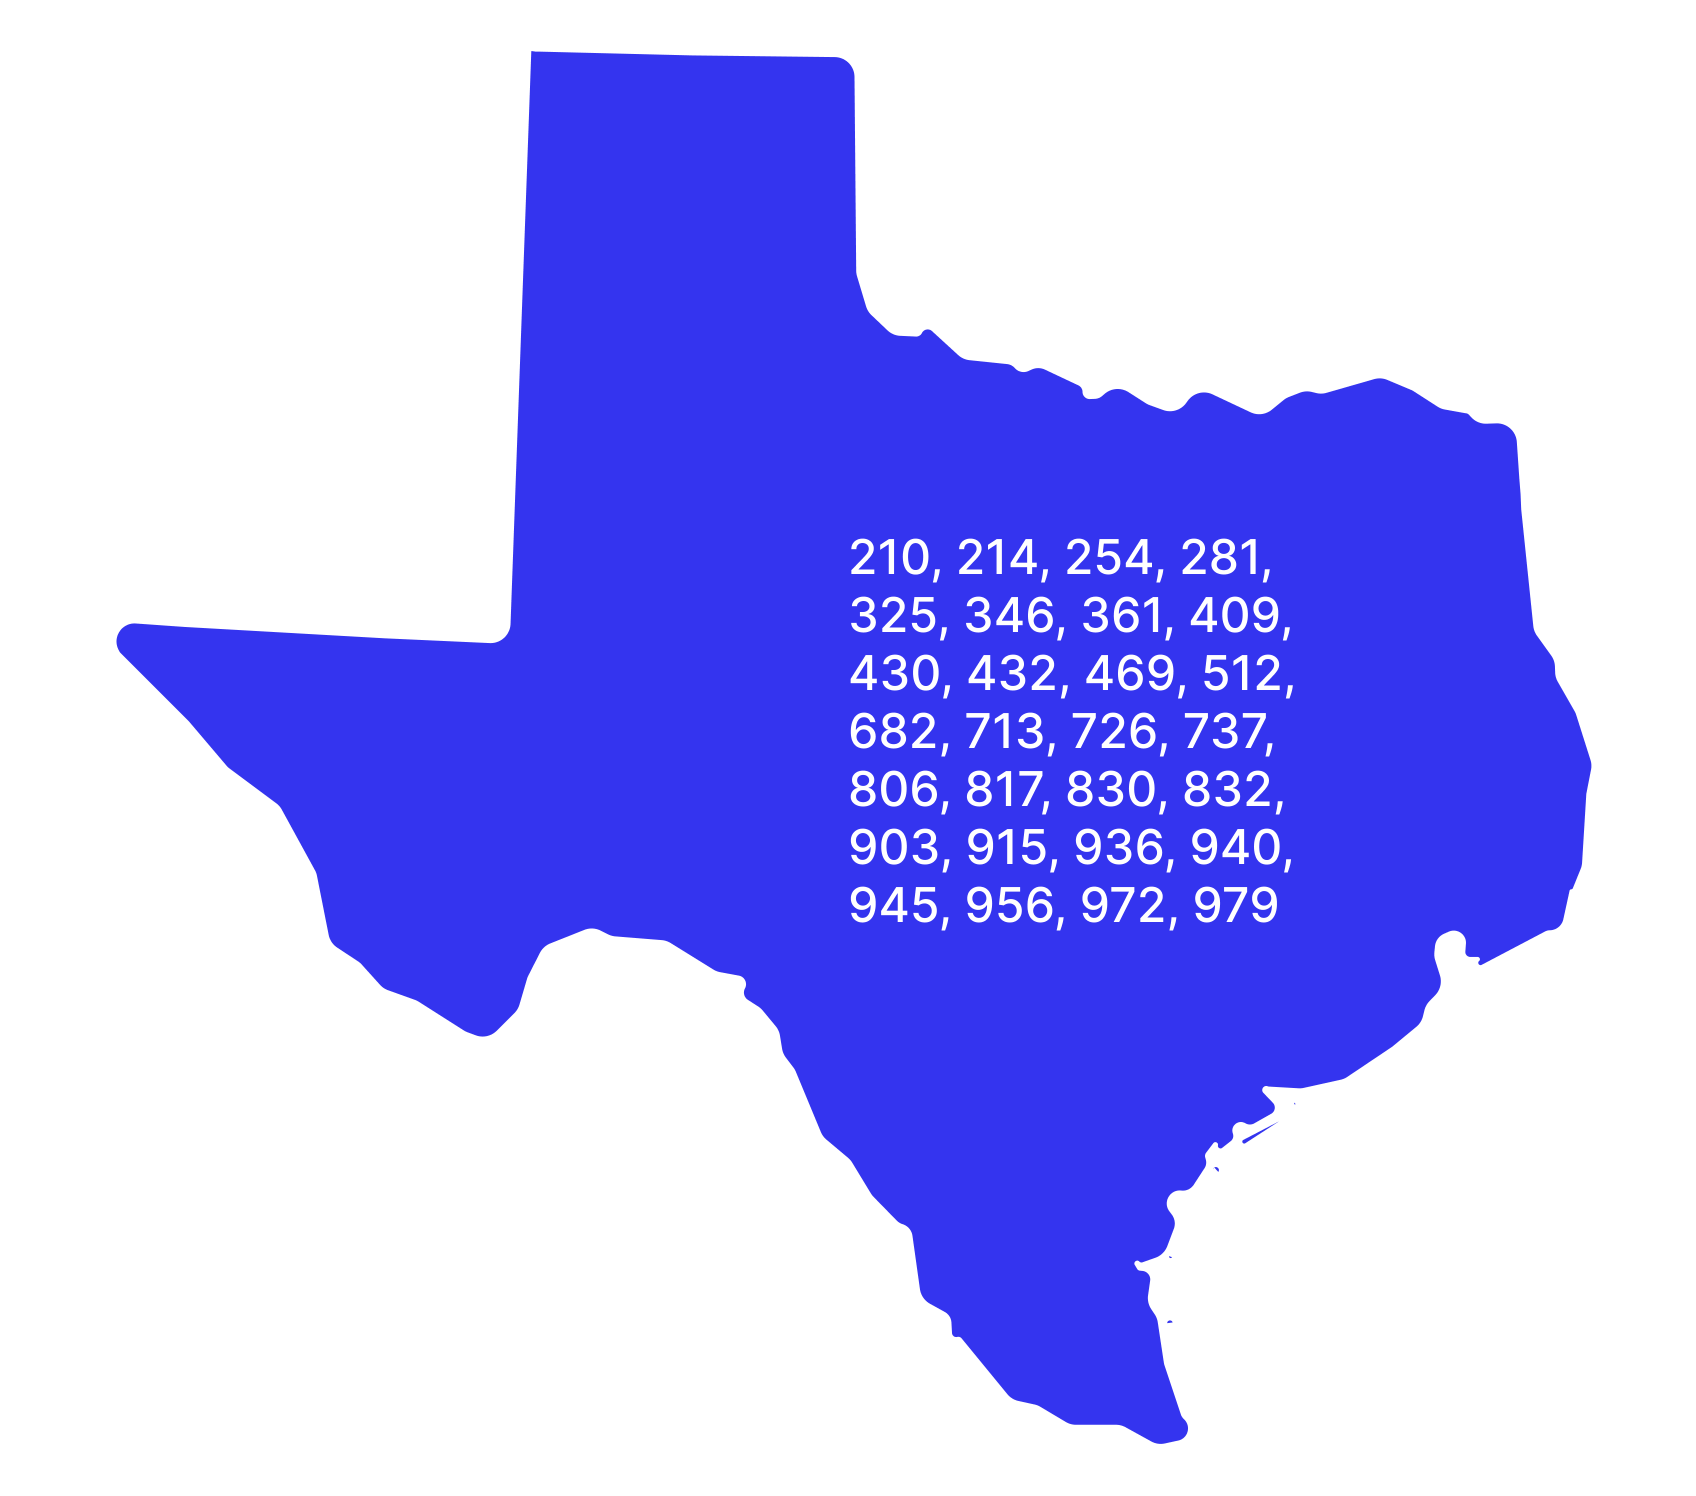 Texas phone numbers